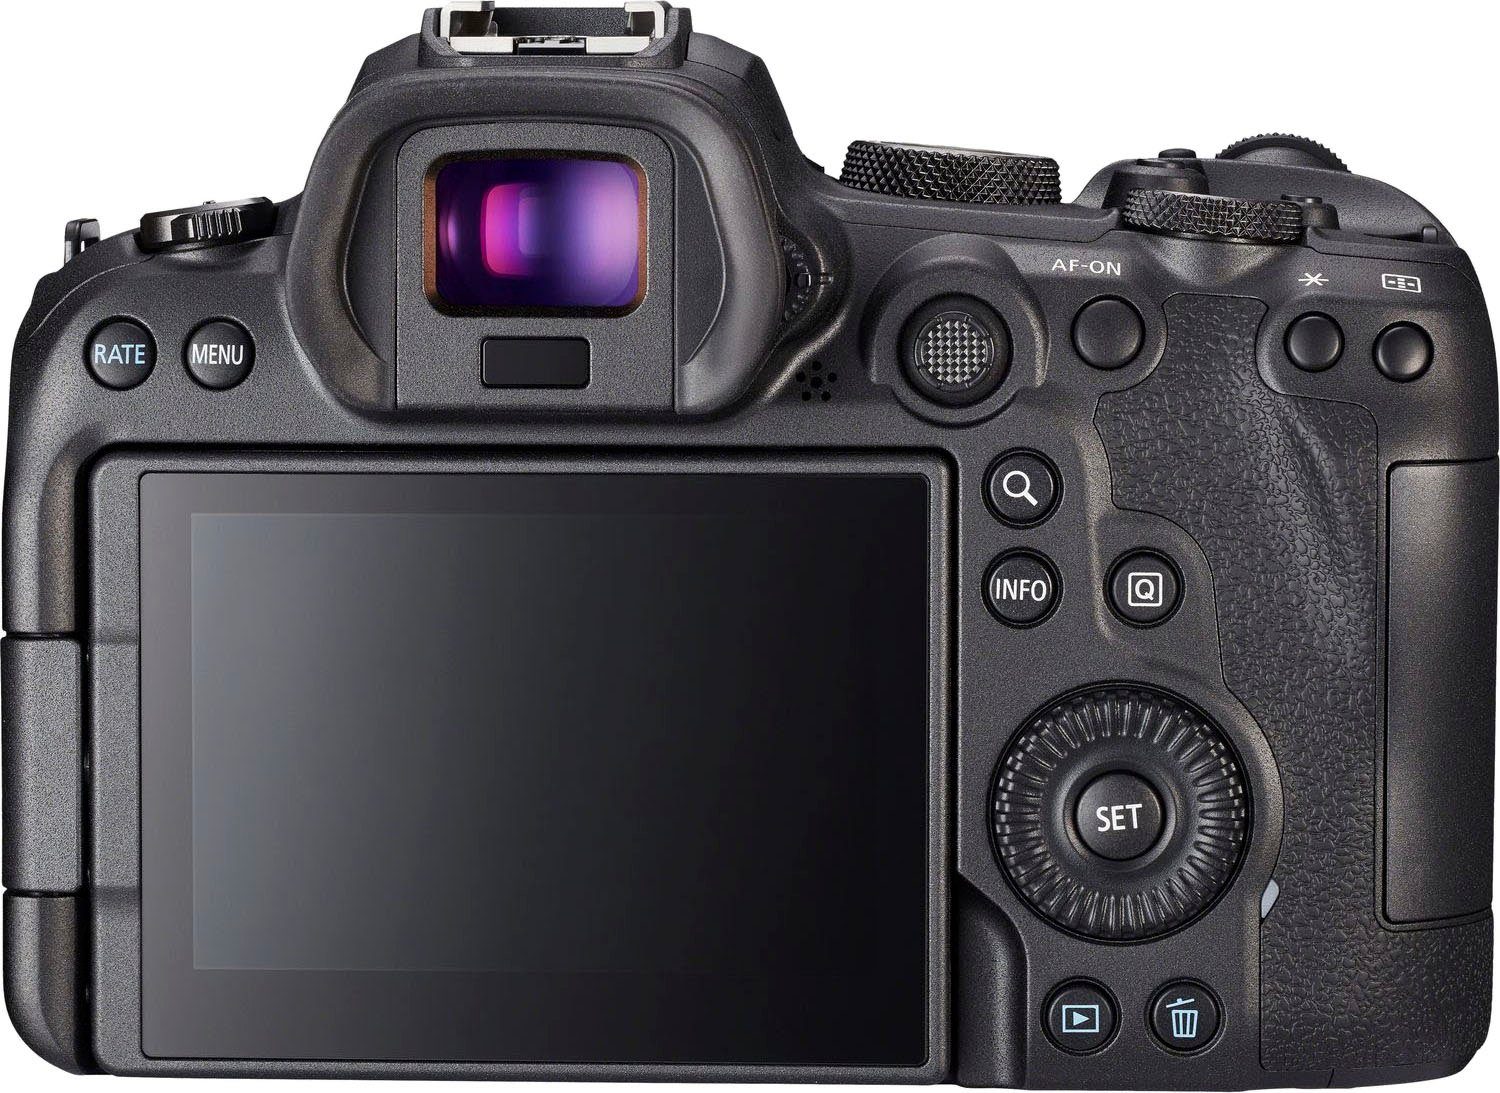 Canon EOS R6 F4-7.1 MP, RF WLAN Bluetooth, Gehäuse 24-105mm + STM, (RF STM IS 20,1 (WiFi) Systemkamera IS 24-105mm F4-7.1